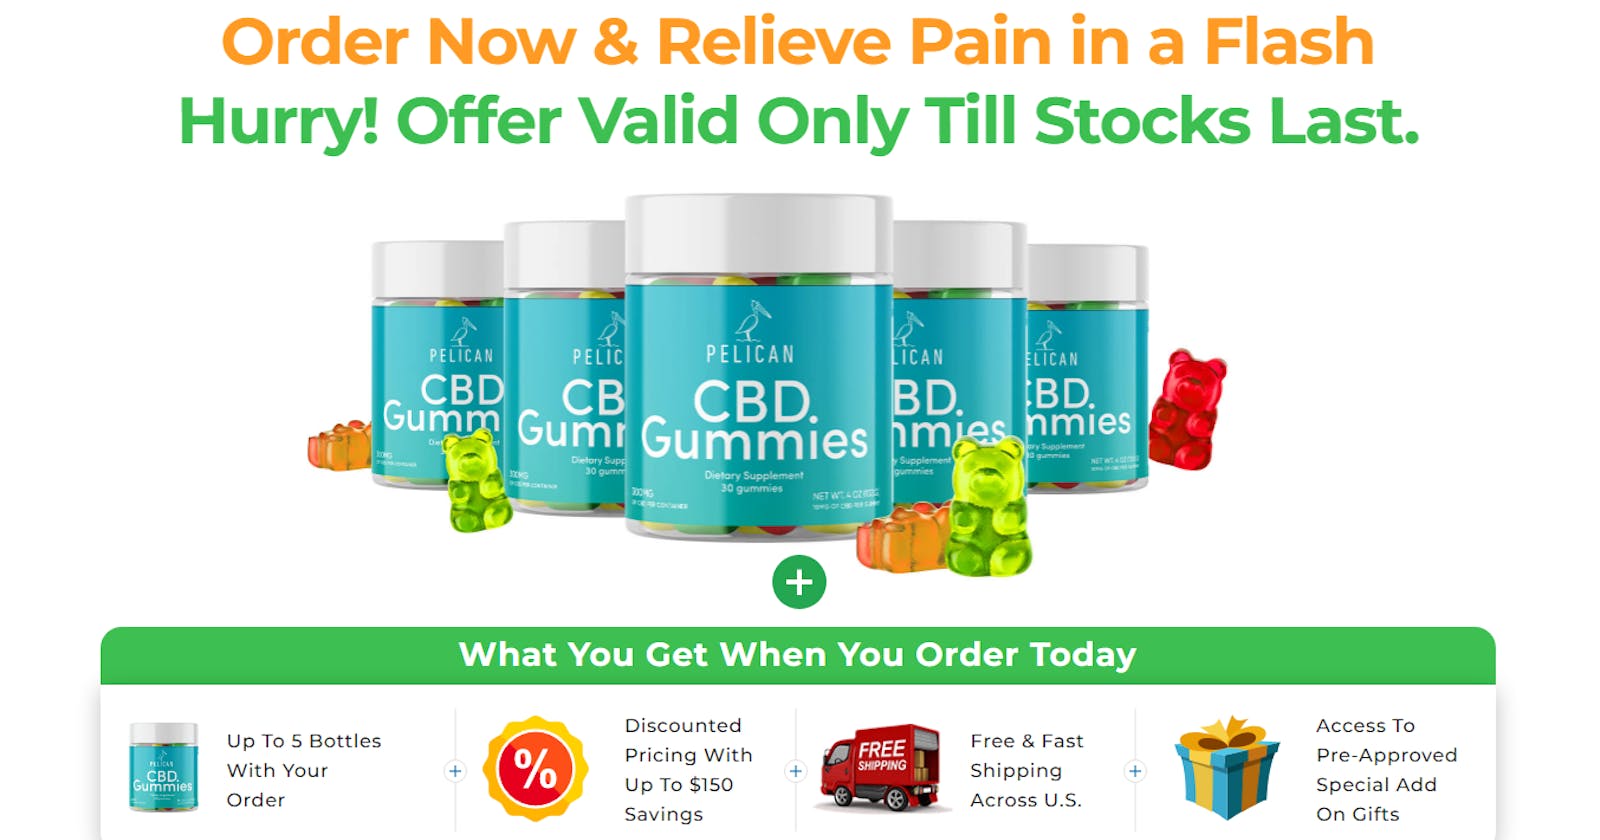 Canna Organic Green CBD Gummies Reviews - Safe & Effective Way To Pain Relief!!